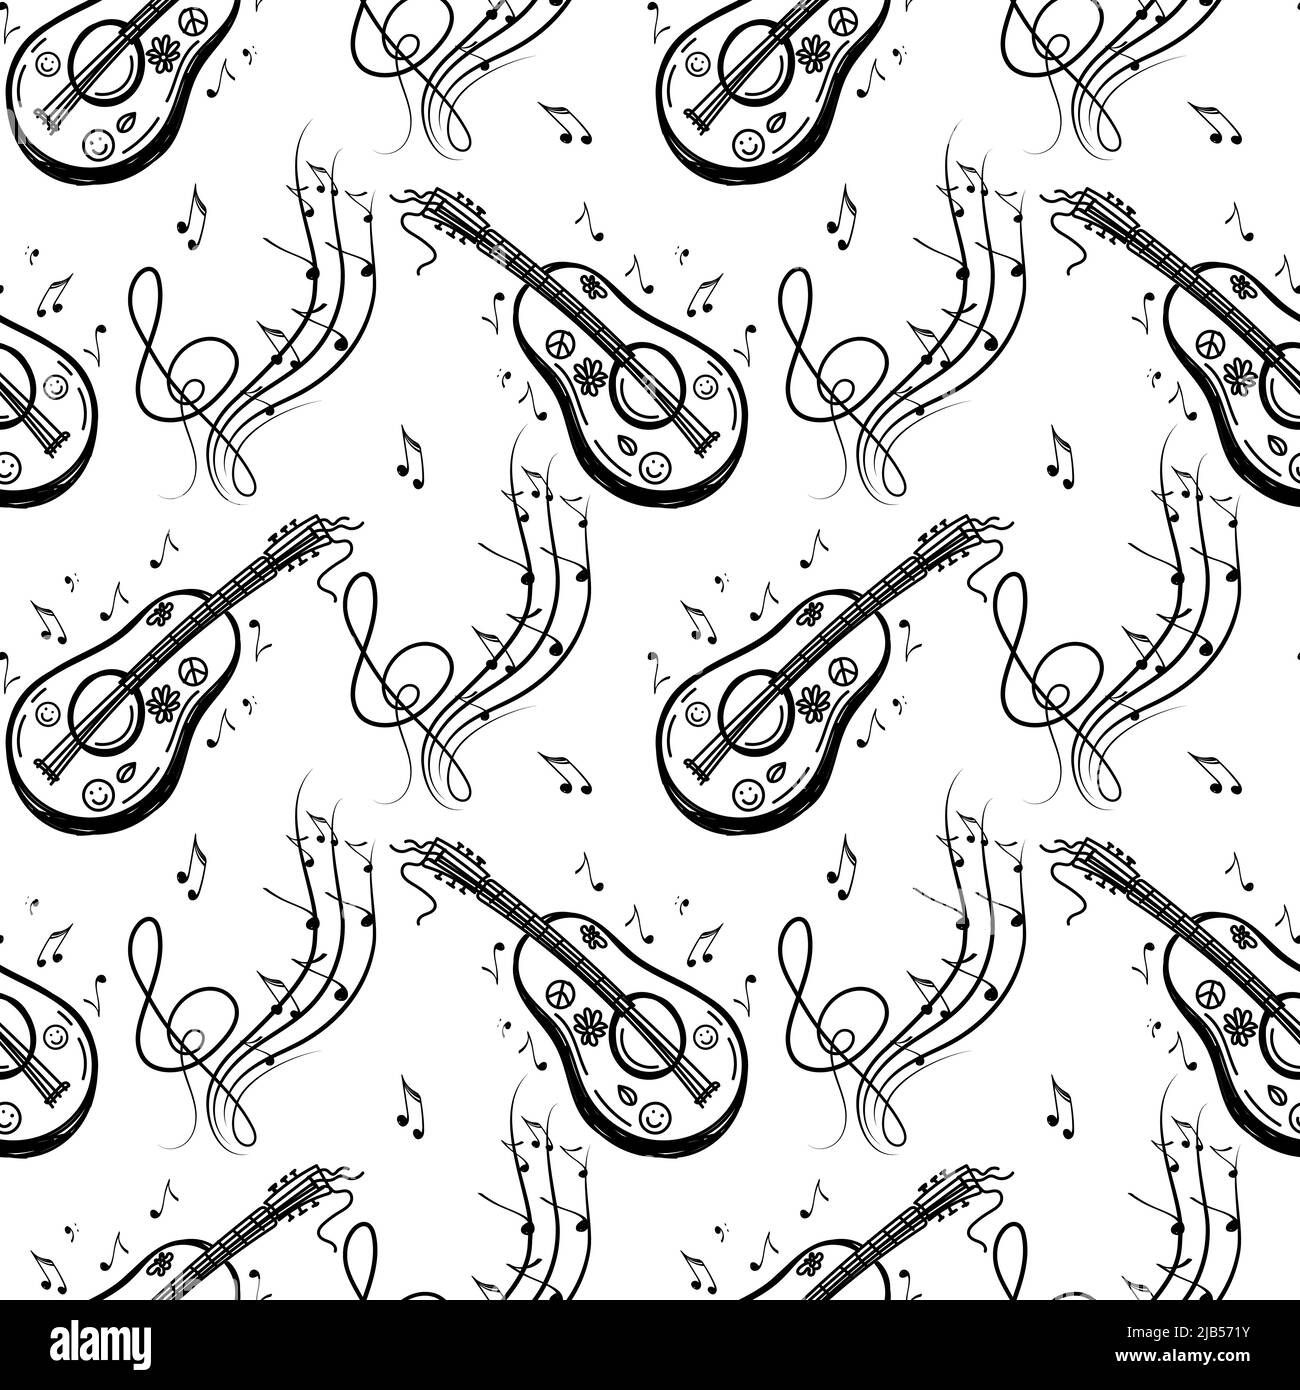 A seamless pattern of musical symbols, guitar, ukulele, notes, violin keys. Hand-drawn doodle-style elements. Vector illustration Stock Vector